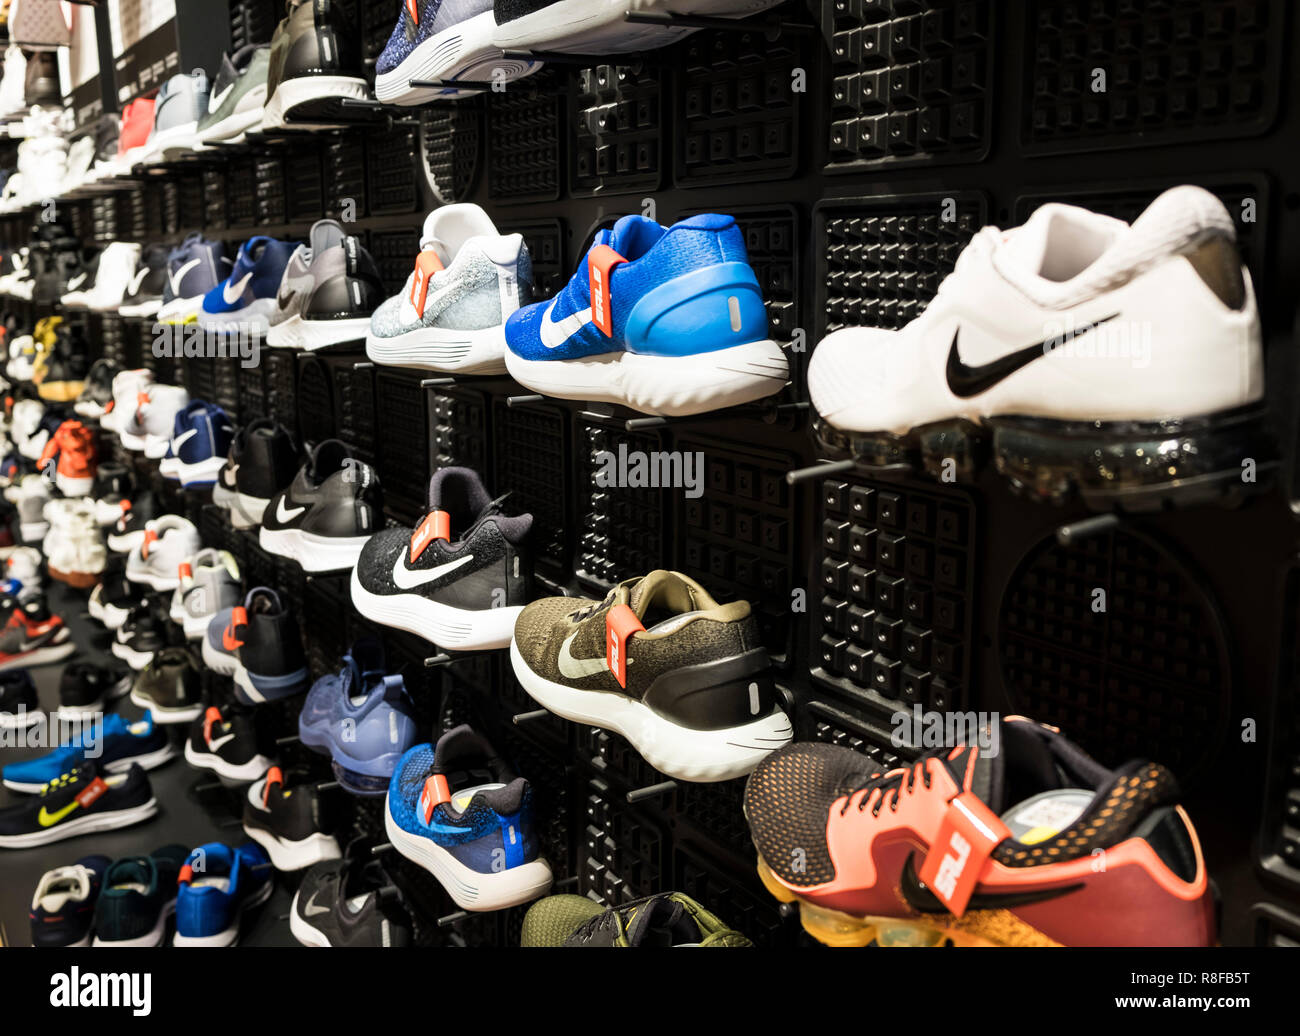 Scarpe Nike Immagini e Fotos Stock - Alamy